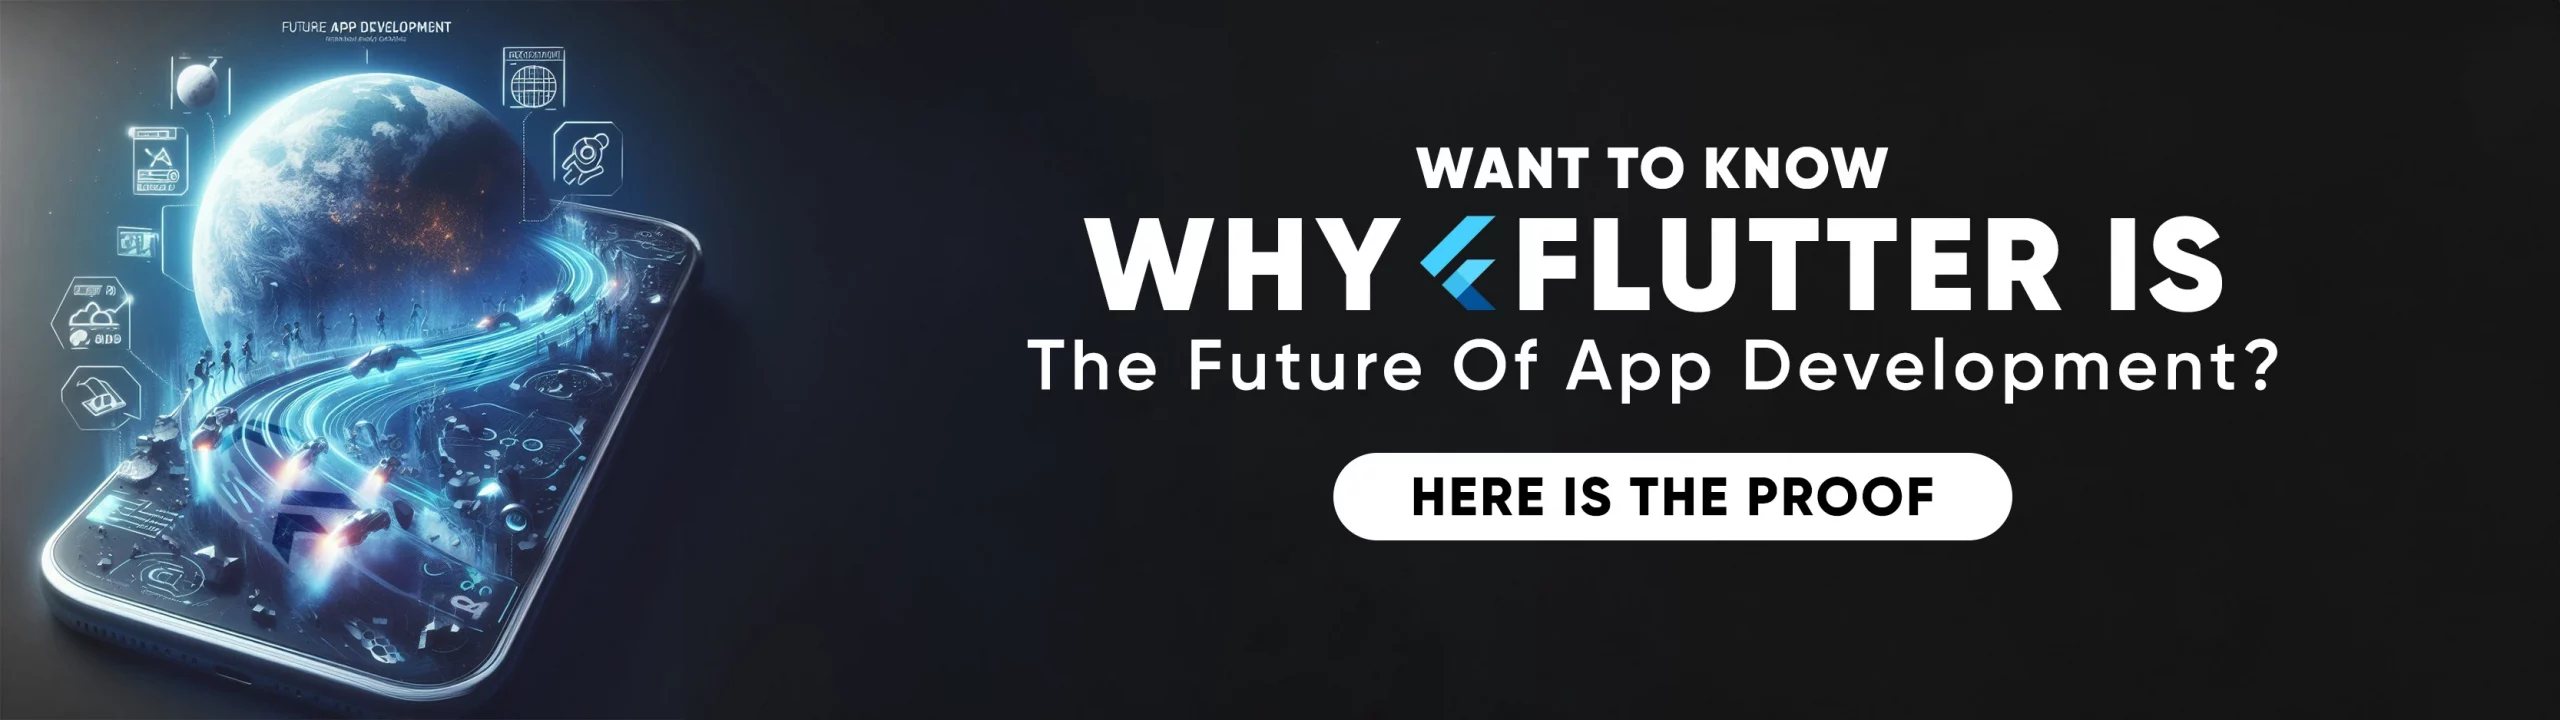 The Future Of App Development